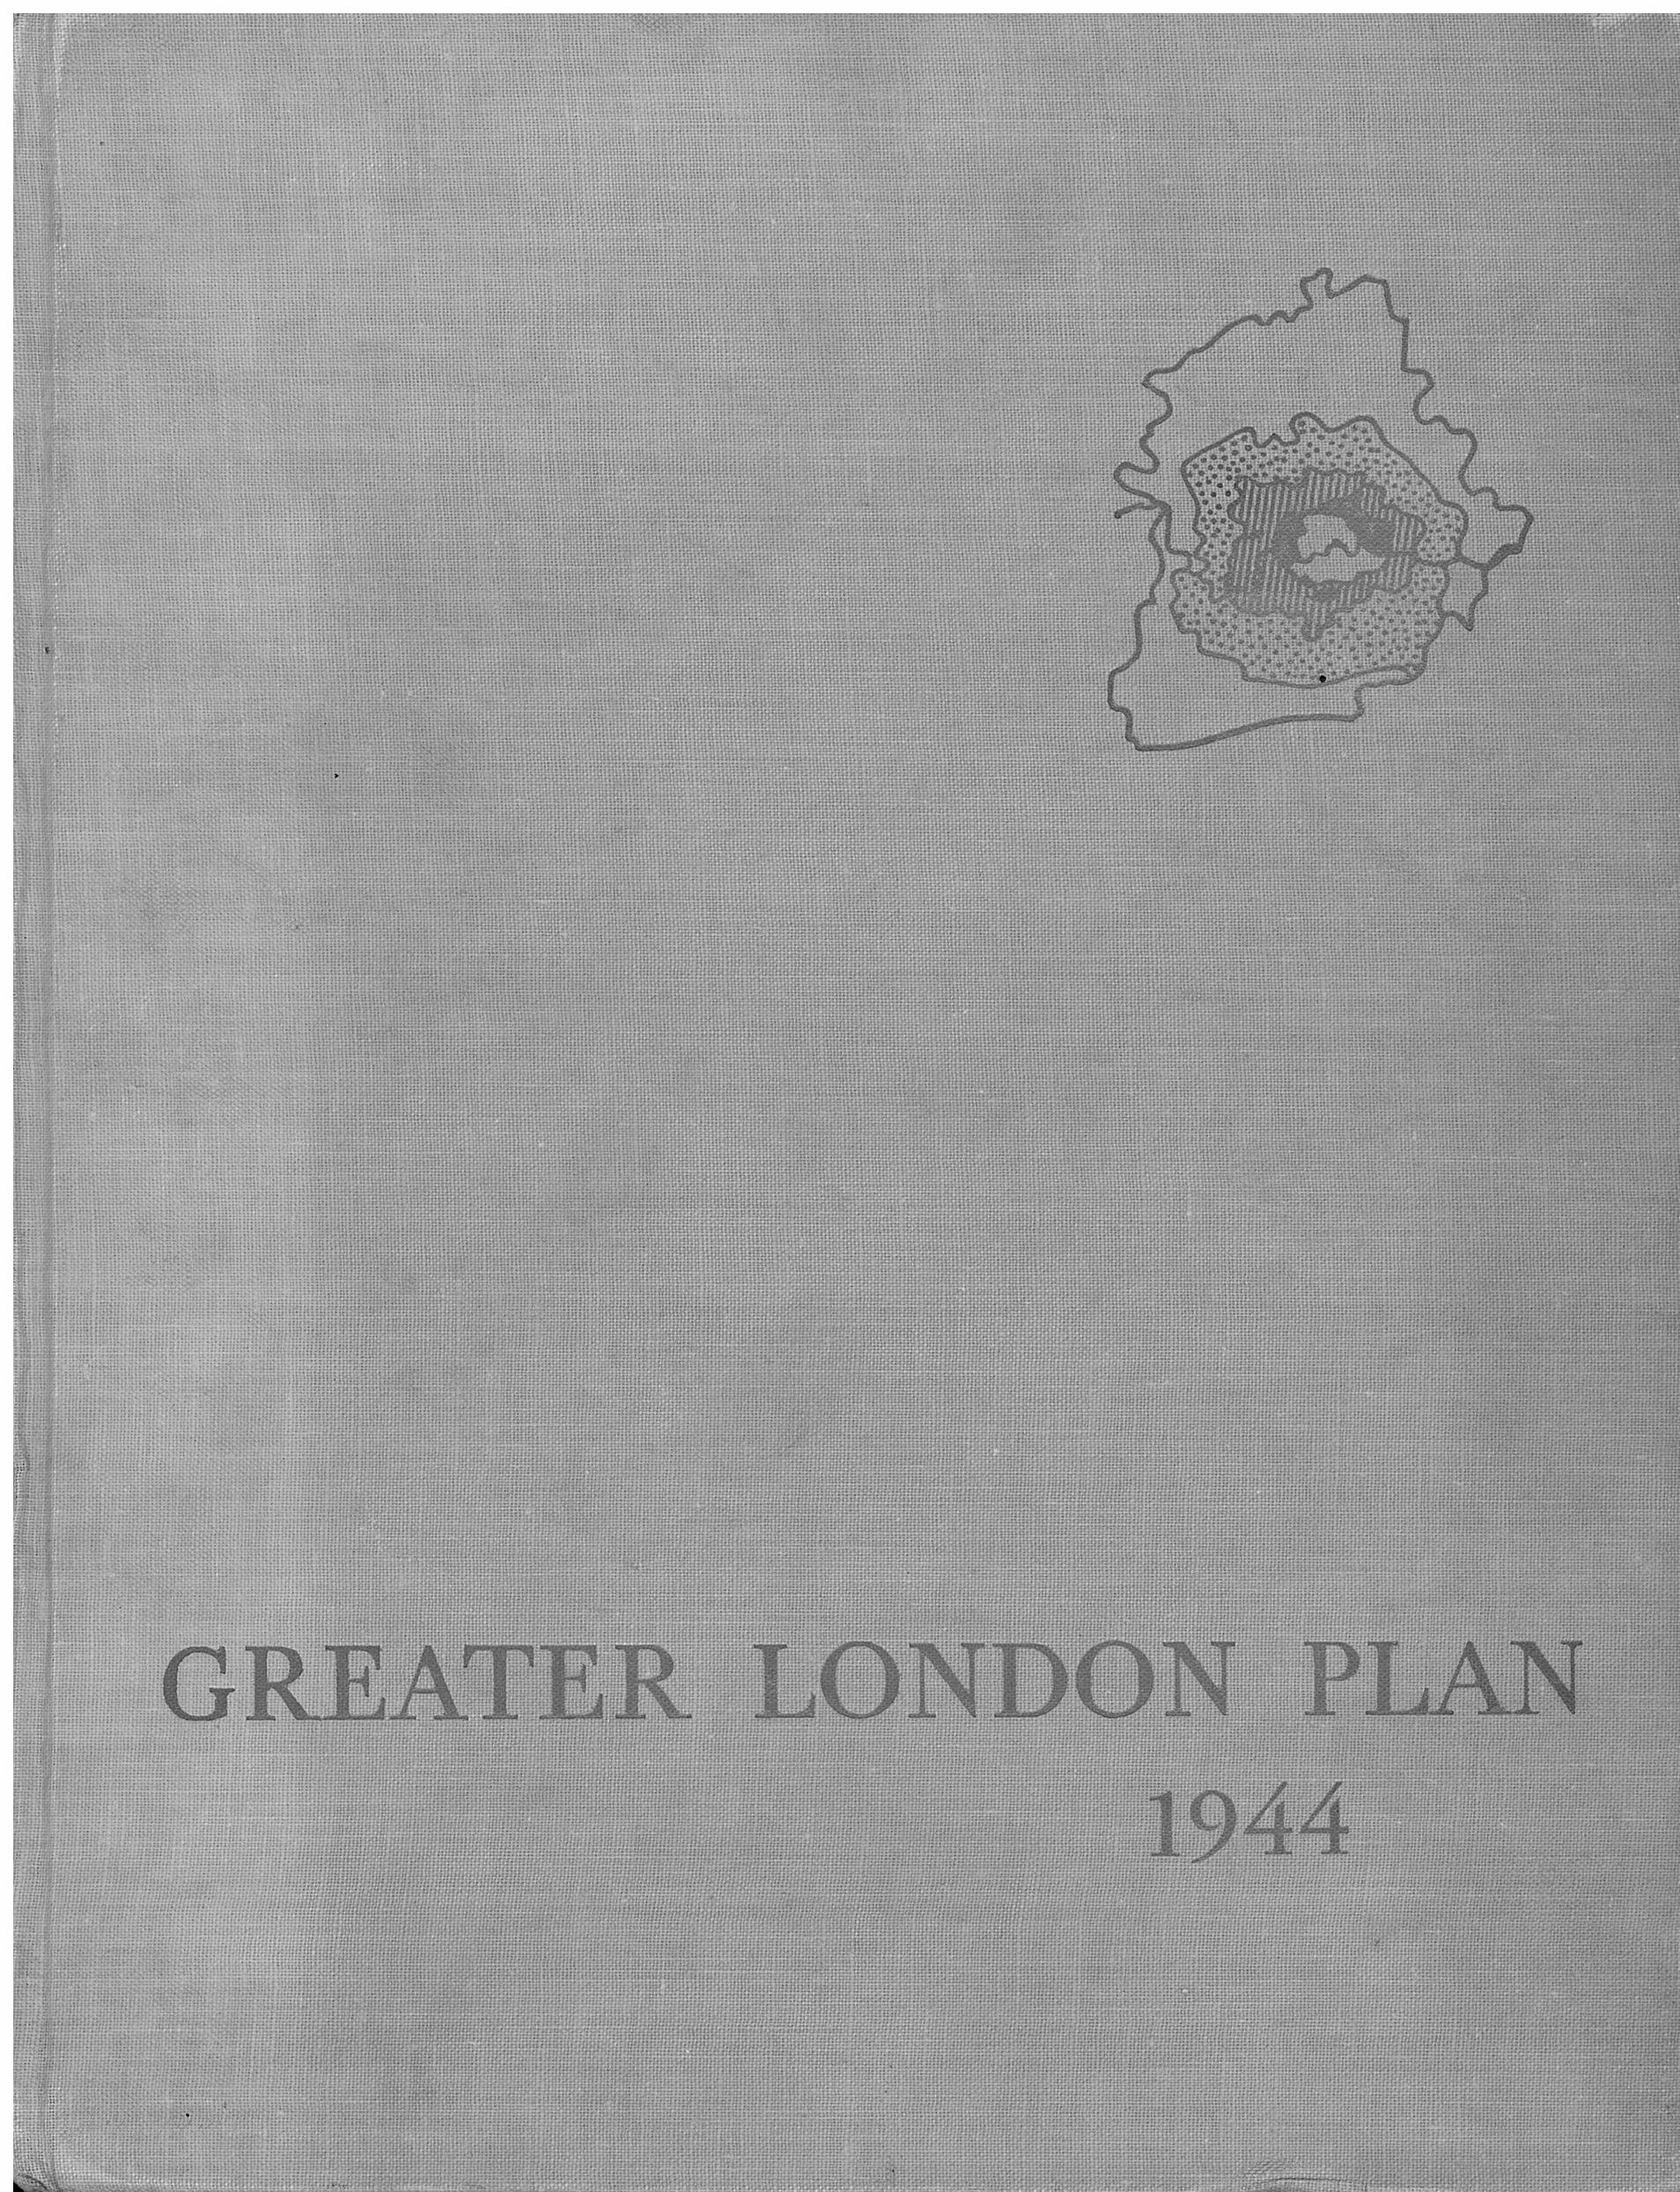 GREATER LONDON PLAN 1944